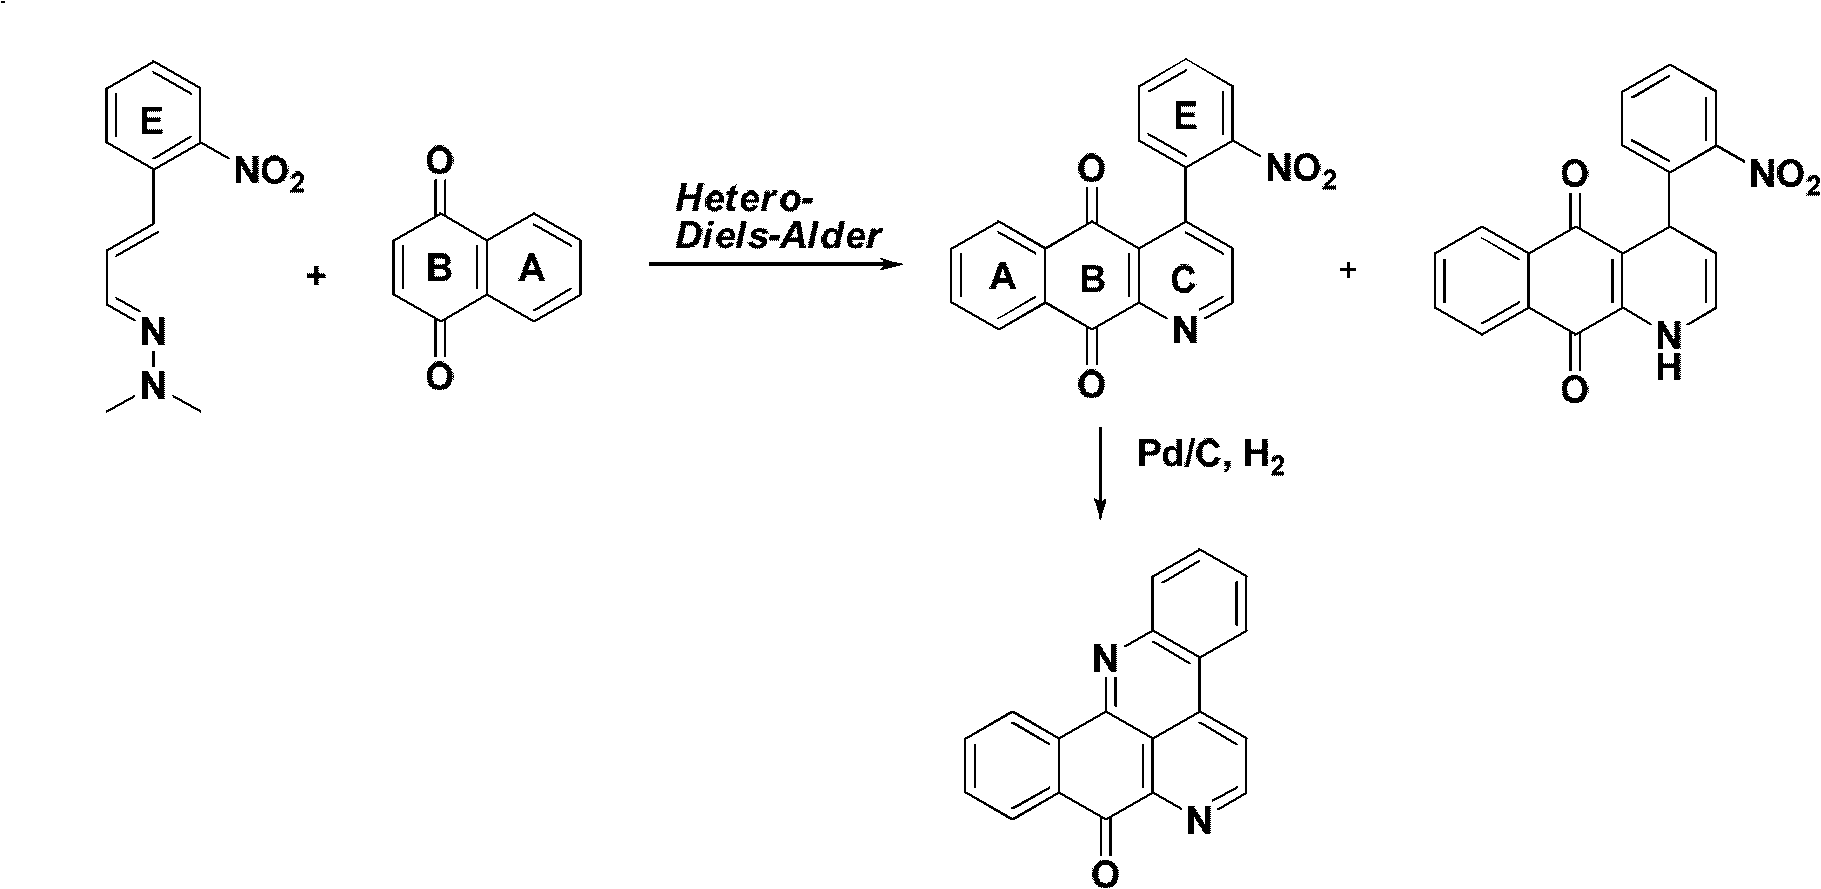 Method for synthesizing benzo[c]pyridine[4,3,2-mn]acridine-8-one